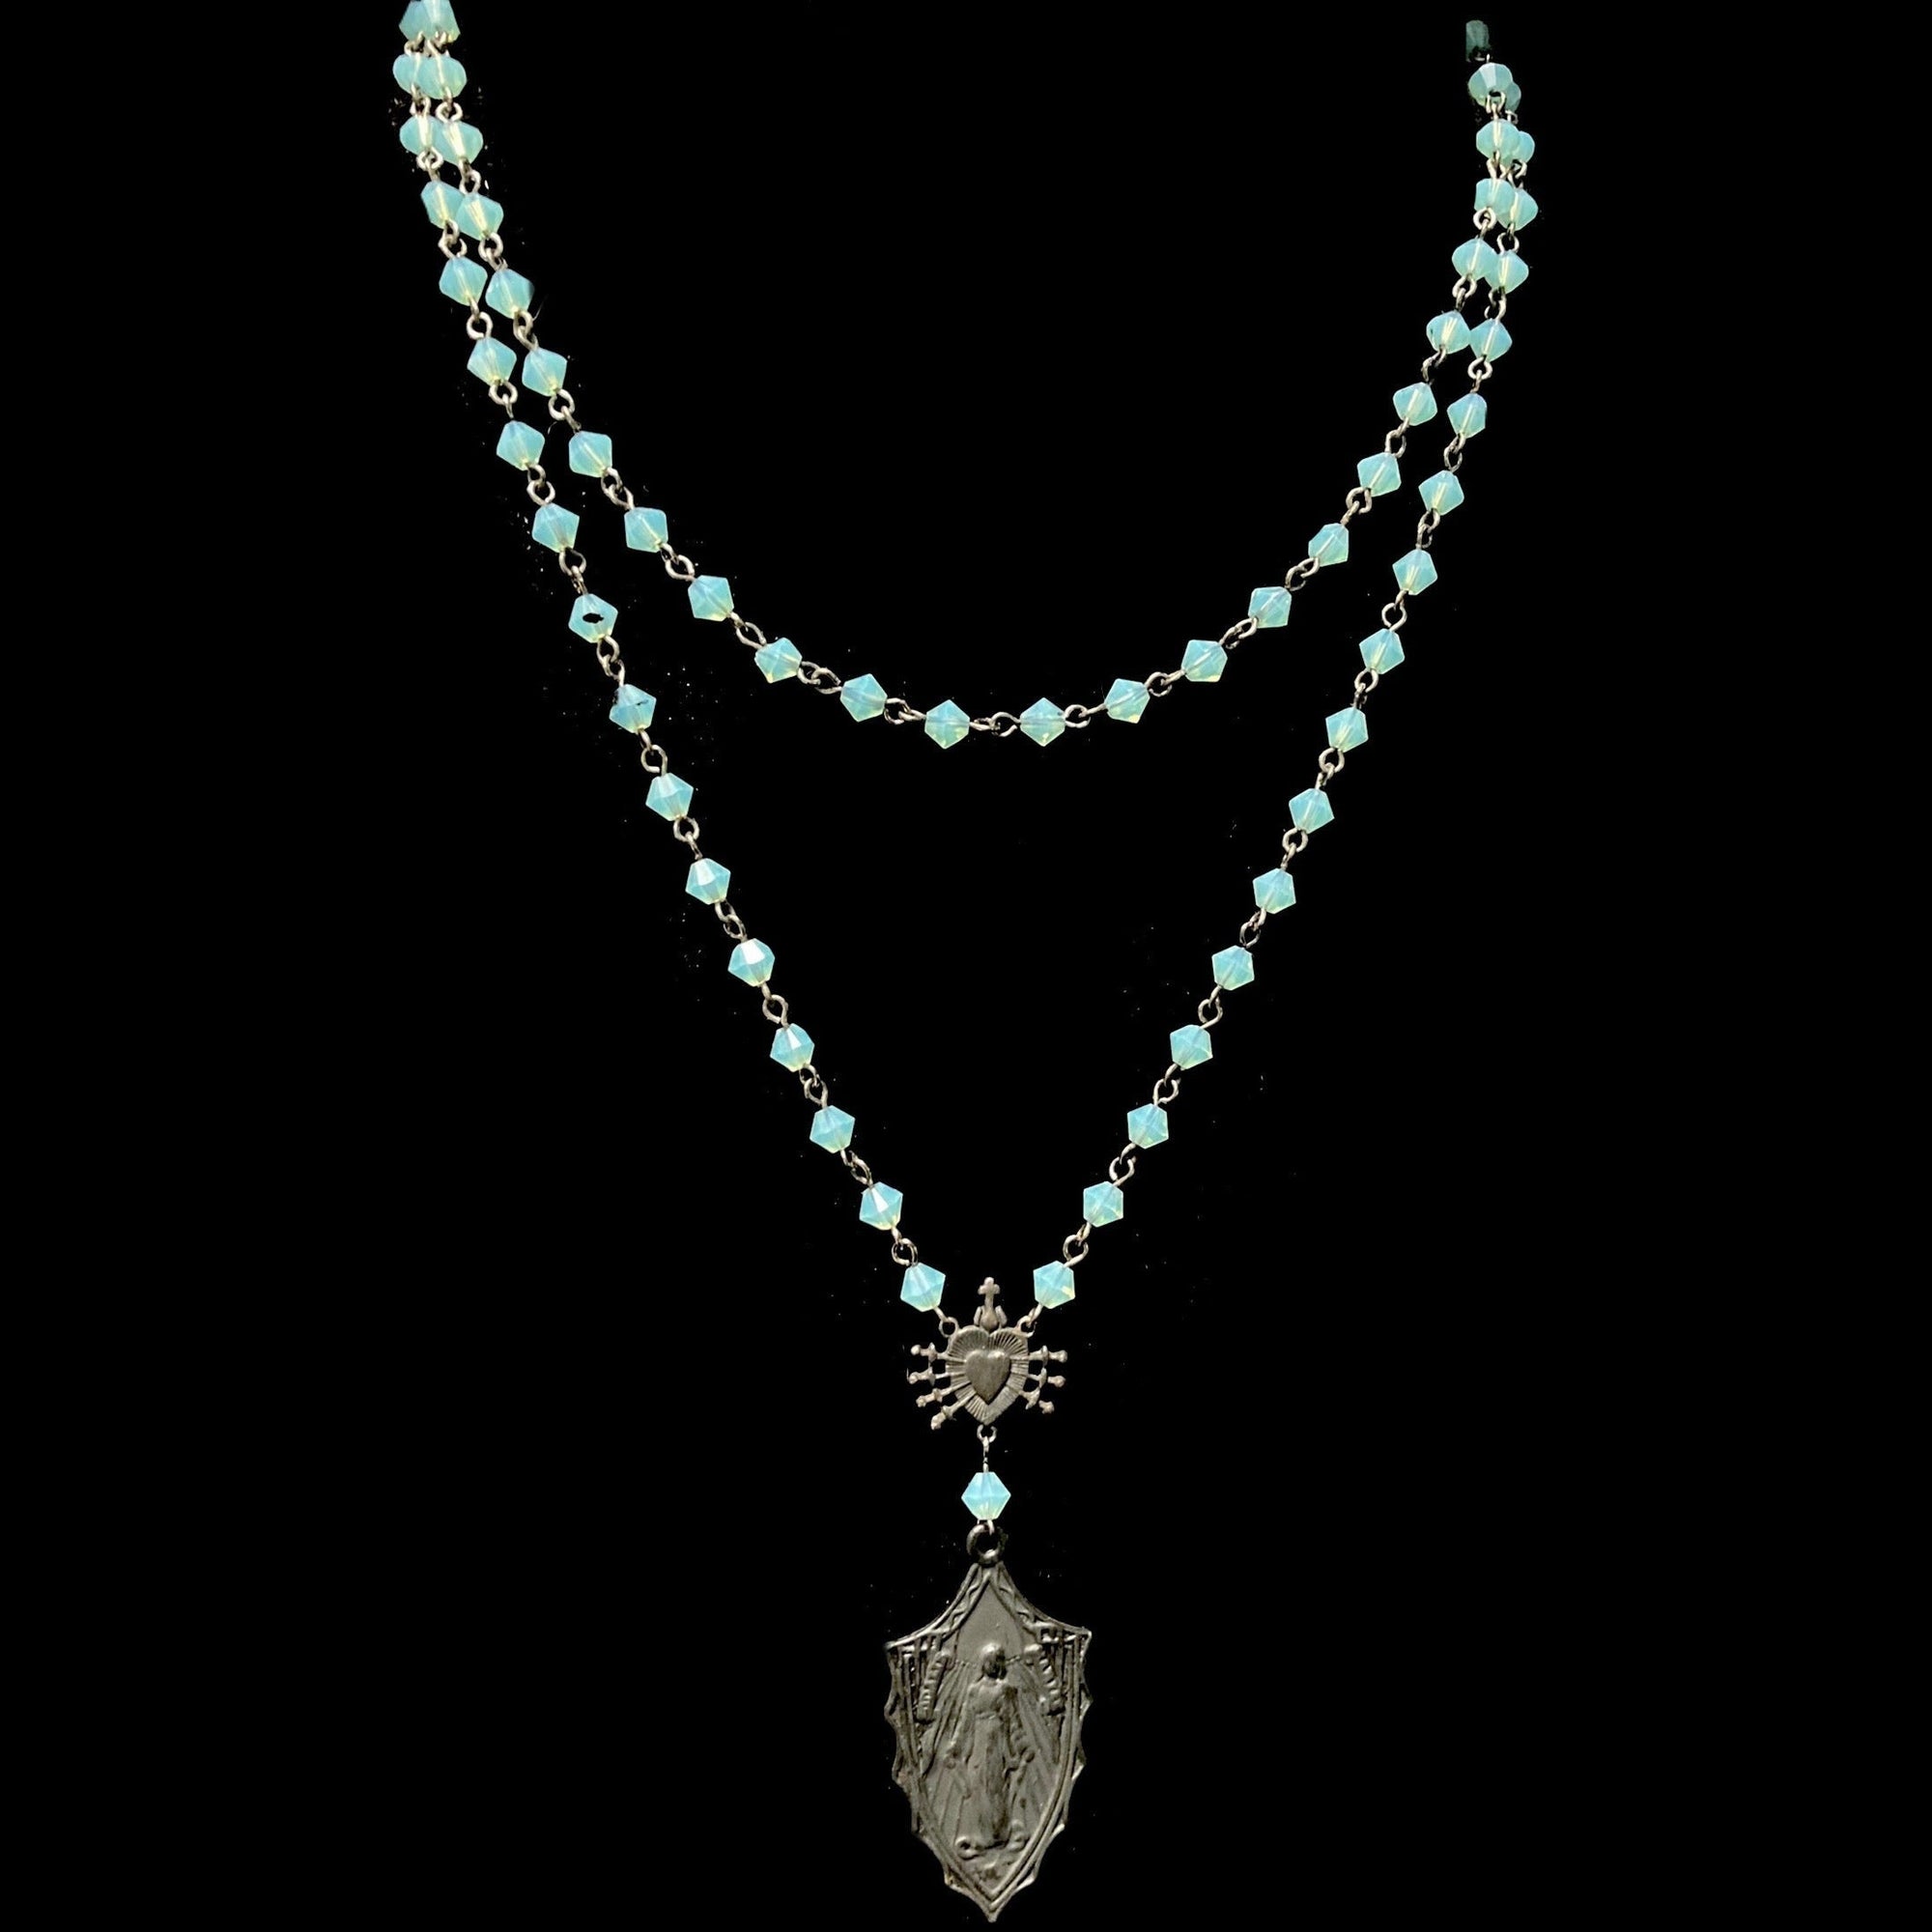 Black Madonna Seven Swords Necklace in Pacific Opal